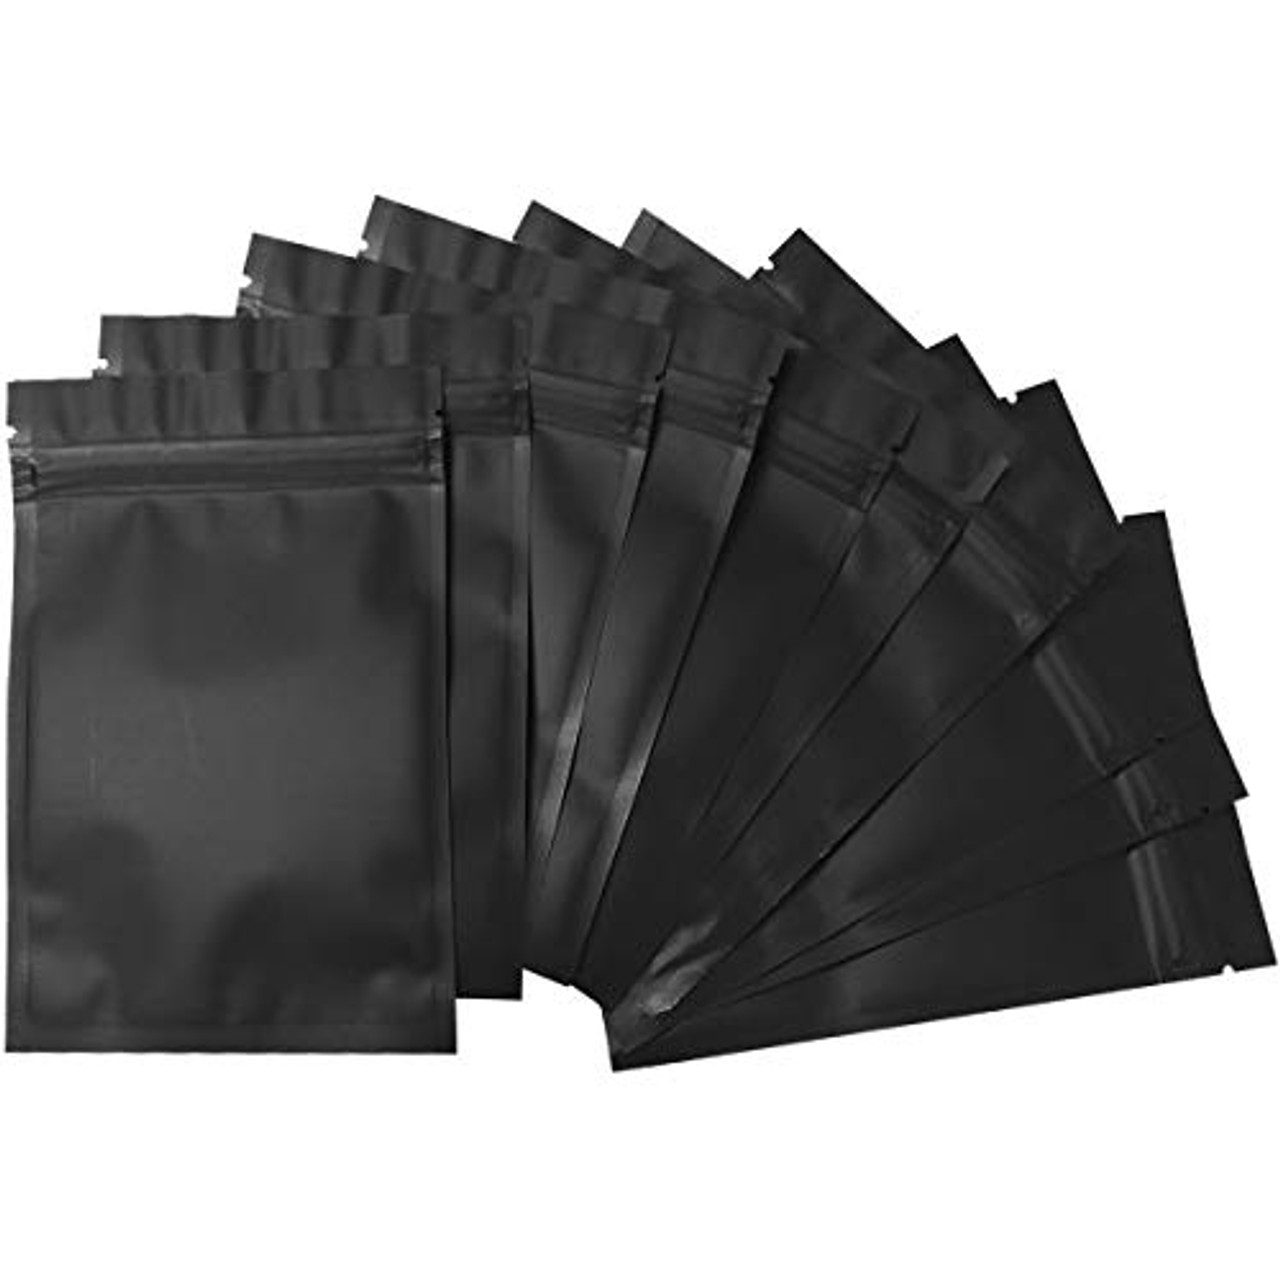 4x6 Plastic Zip Top Bags White Block (Pack of 100) | zip top bags | Only at